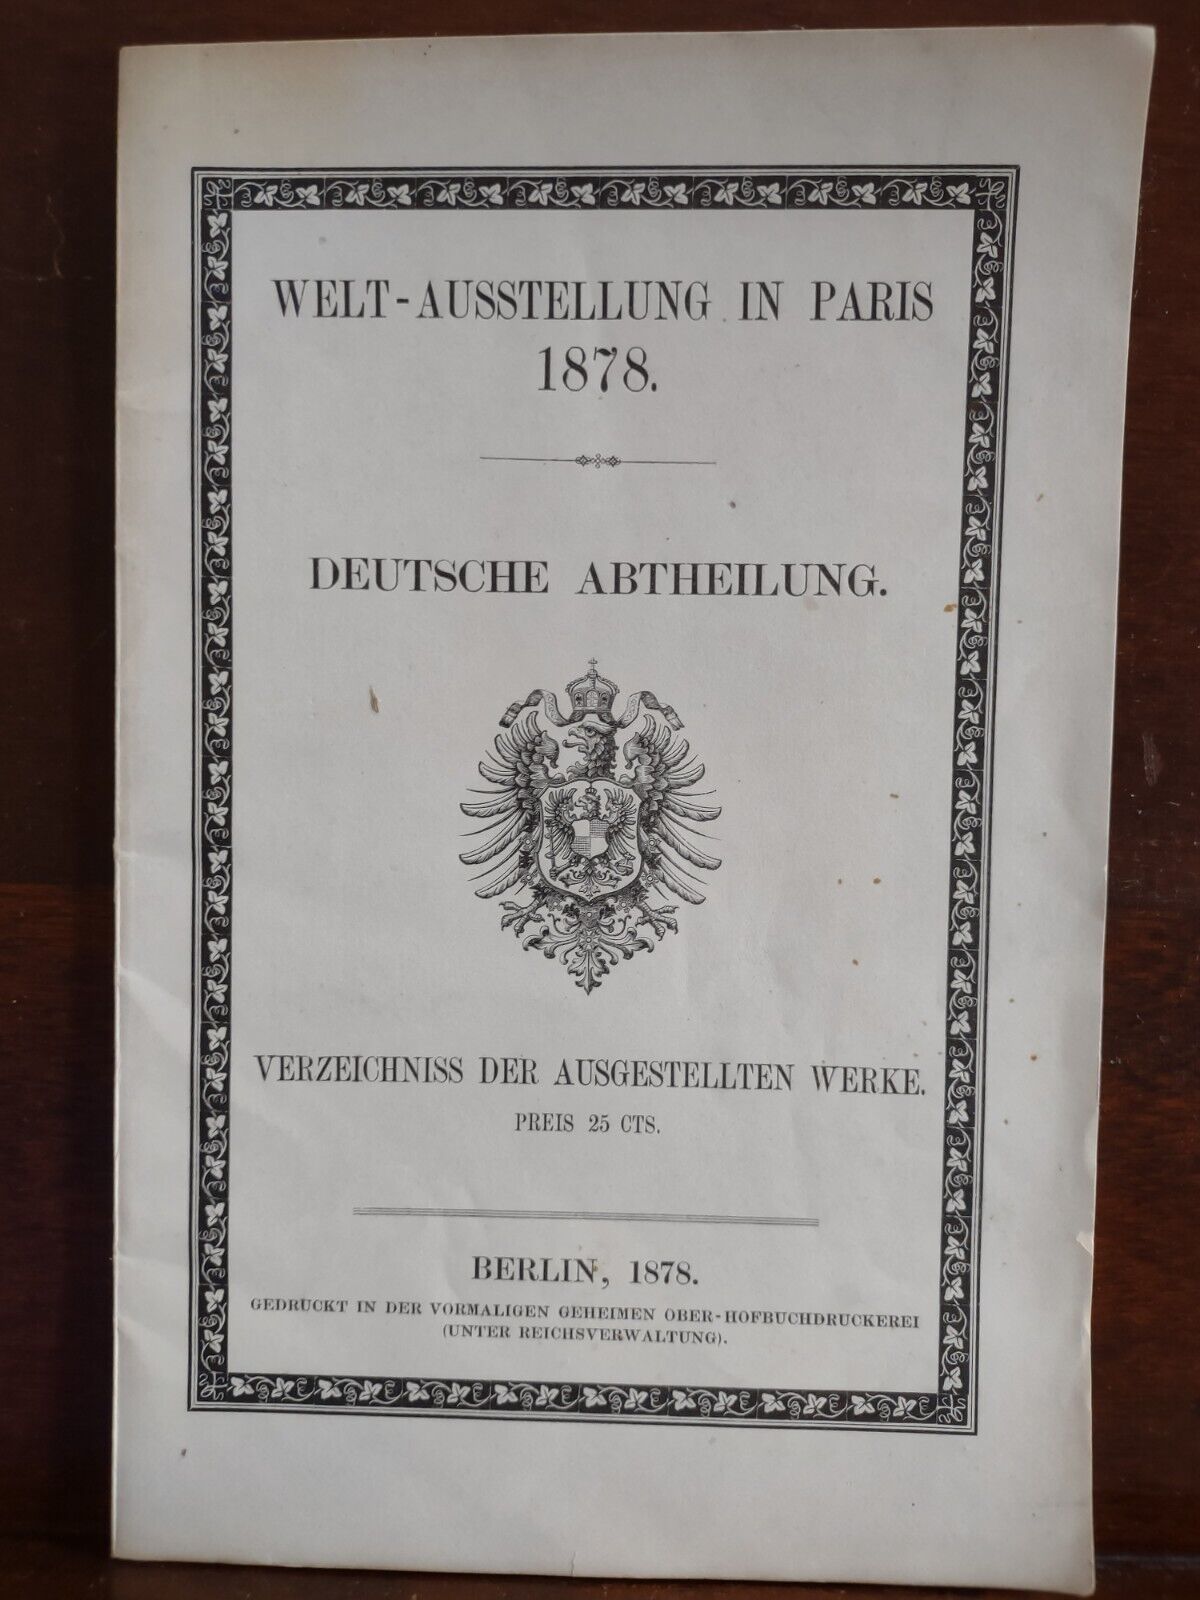 World Exhibition in Paris 1878 German Department List of Exhibited Works